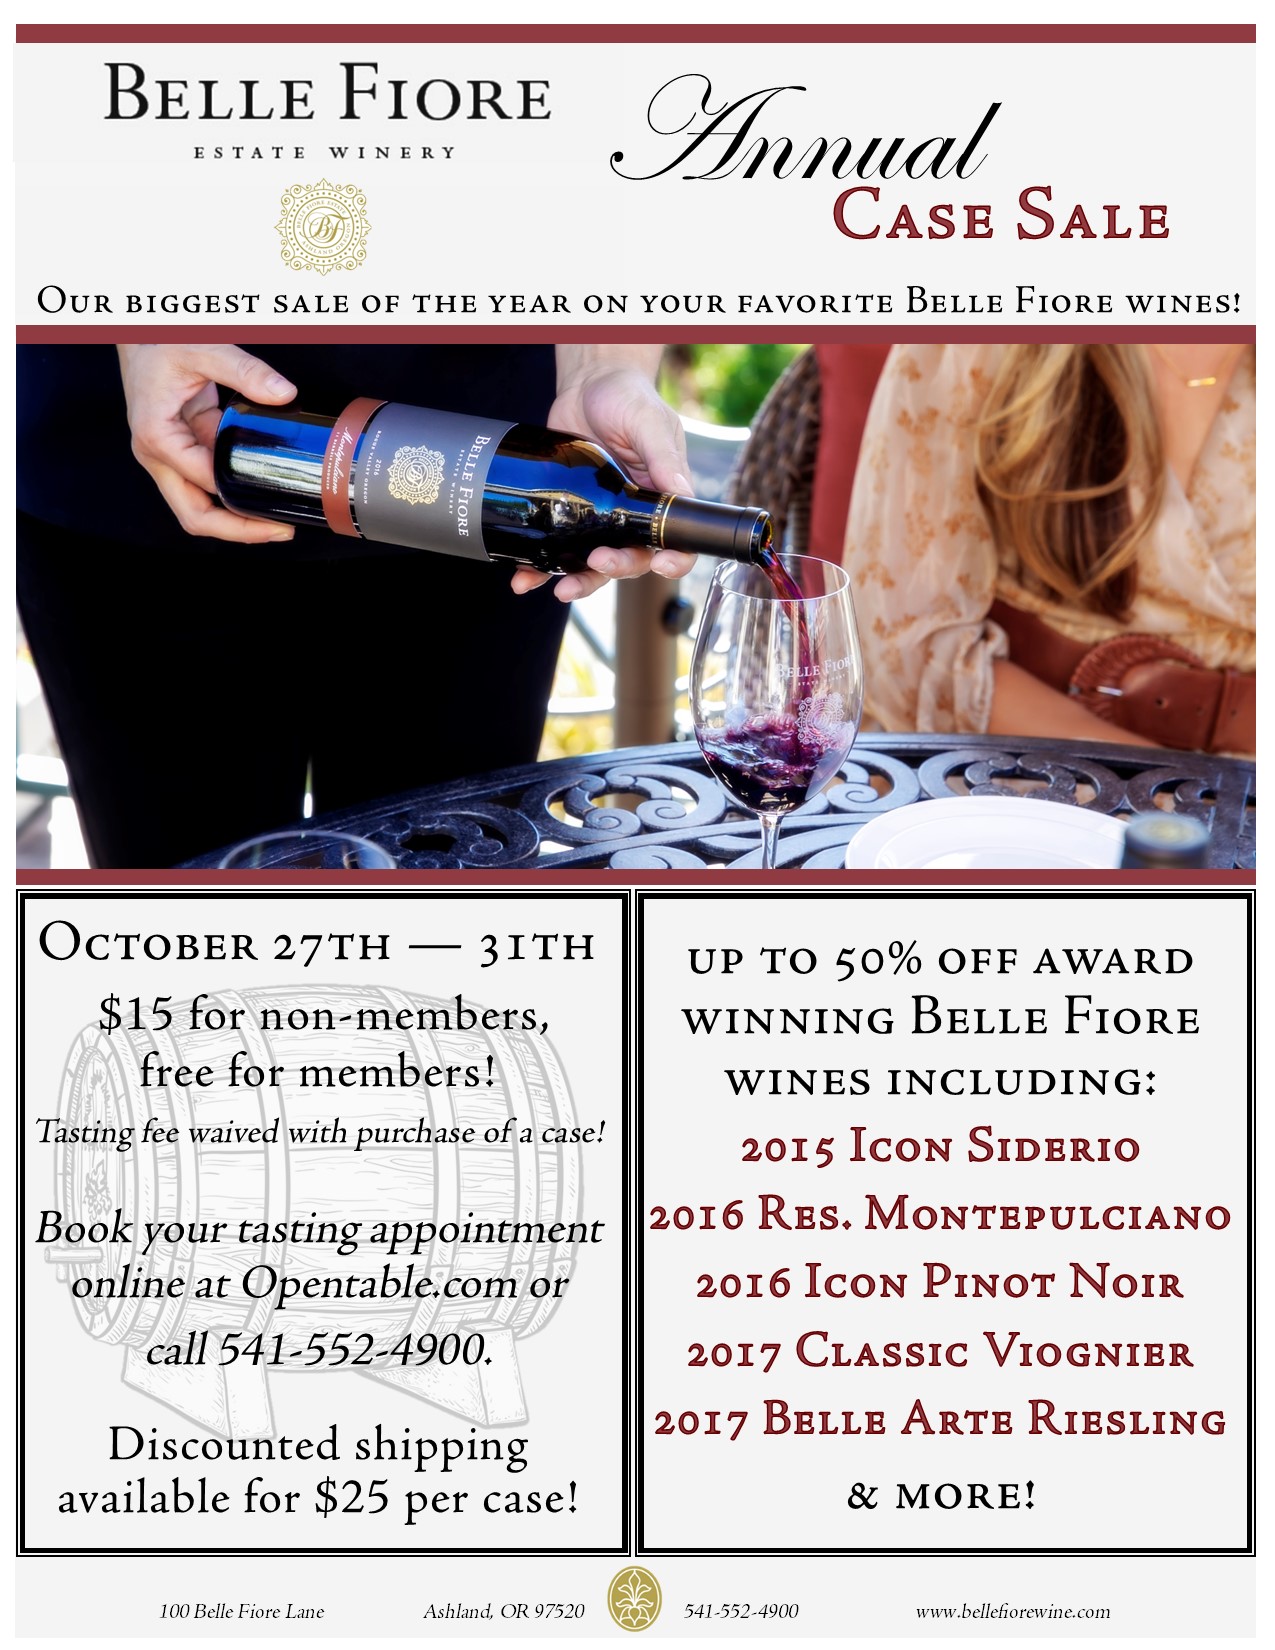 Annual Case Sale - Belle Fiore Winery & Vineyard